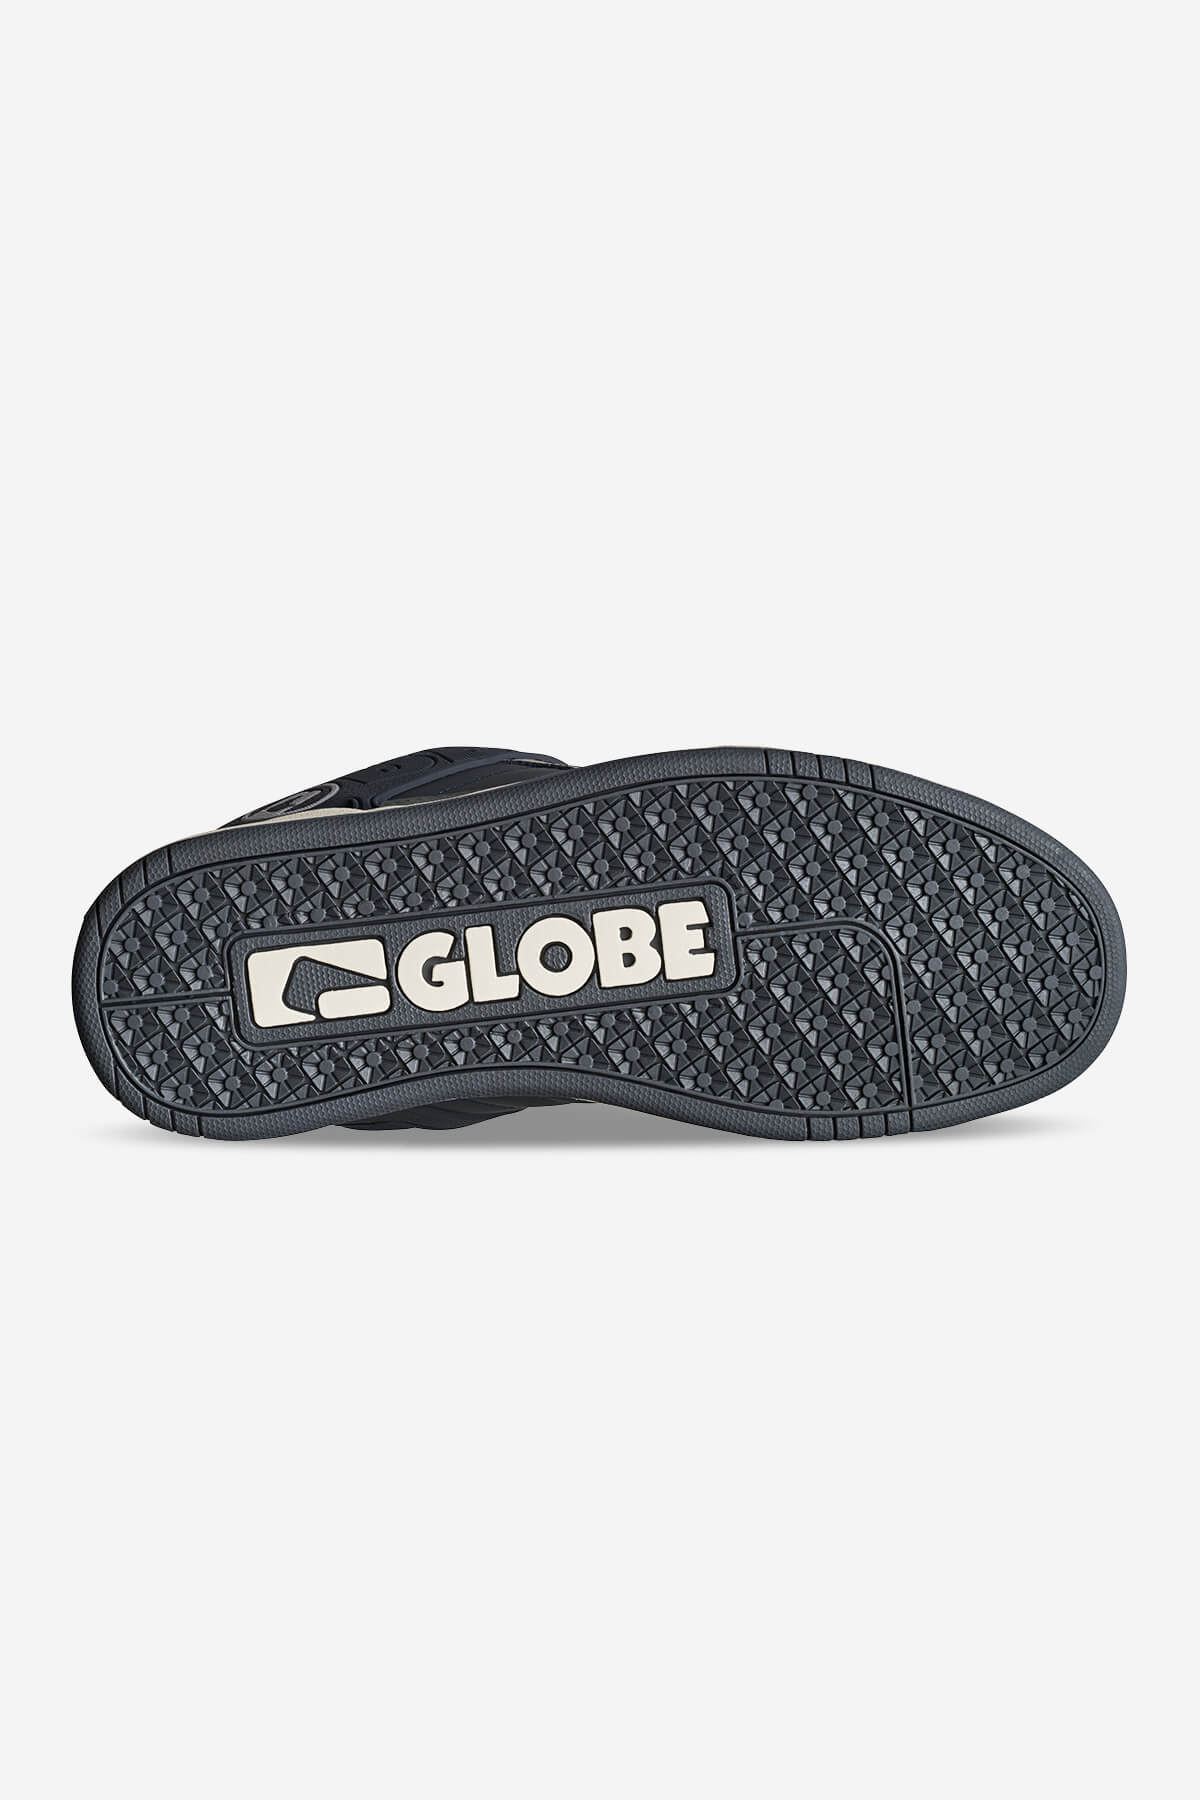 Globe - Tilt - Ébano/Charcoal - skateboard Zapatos